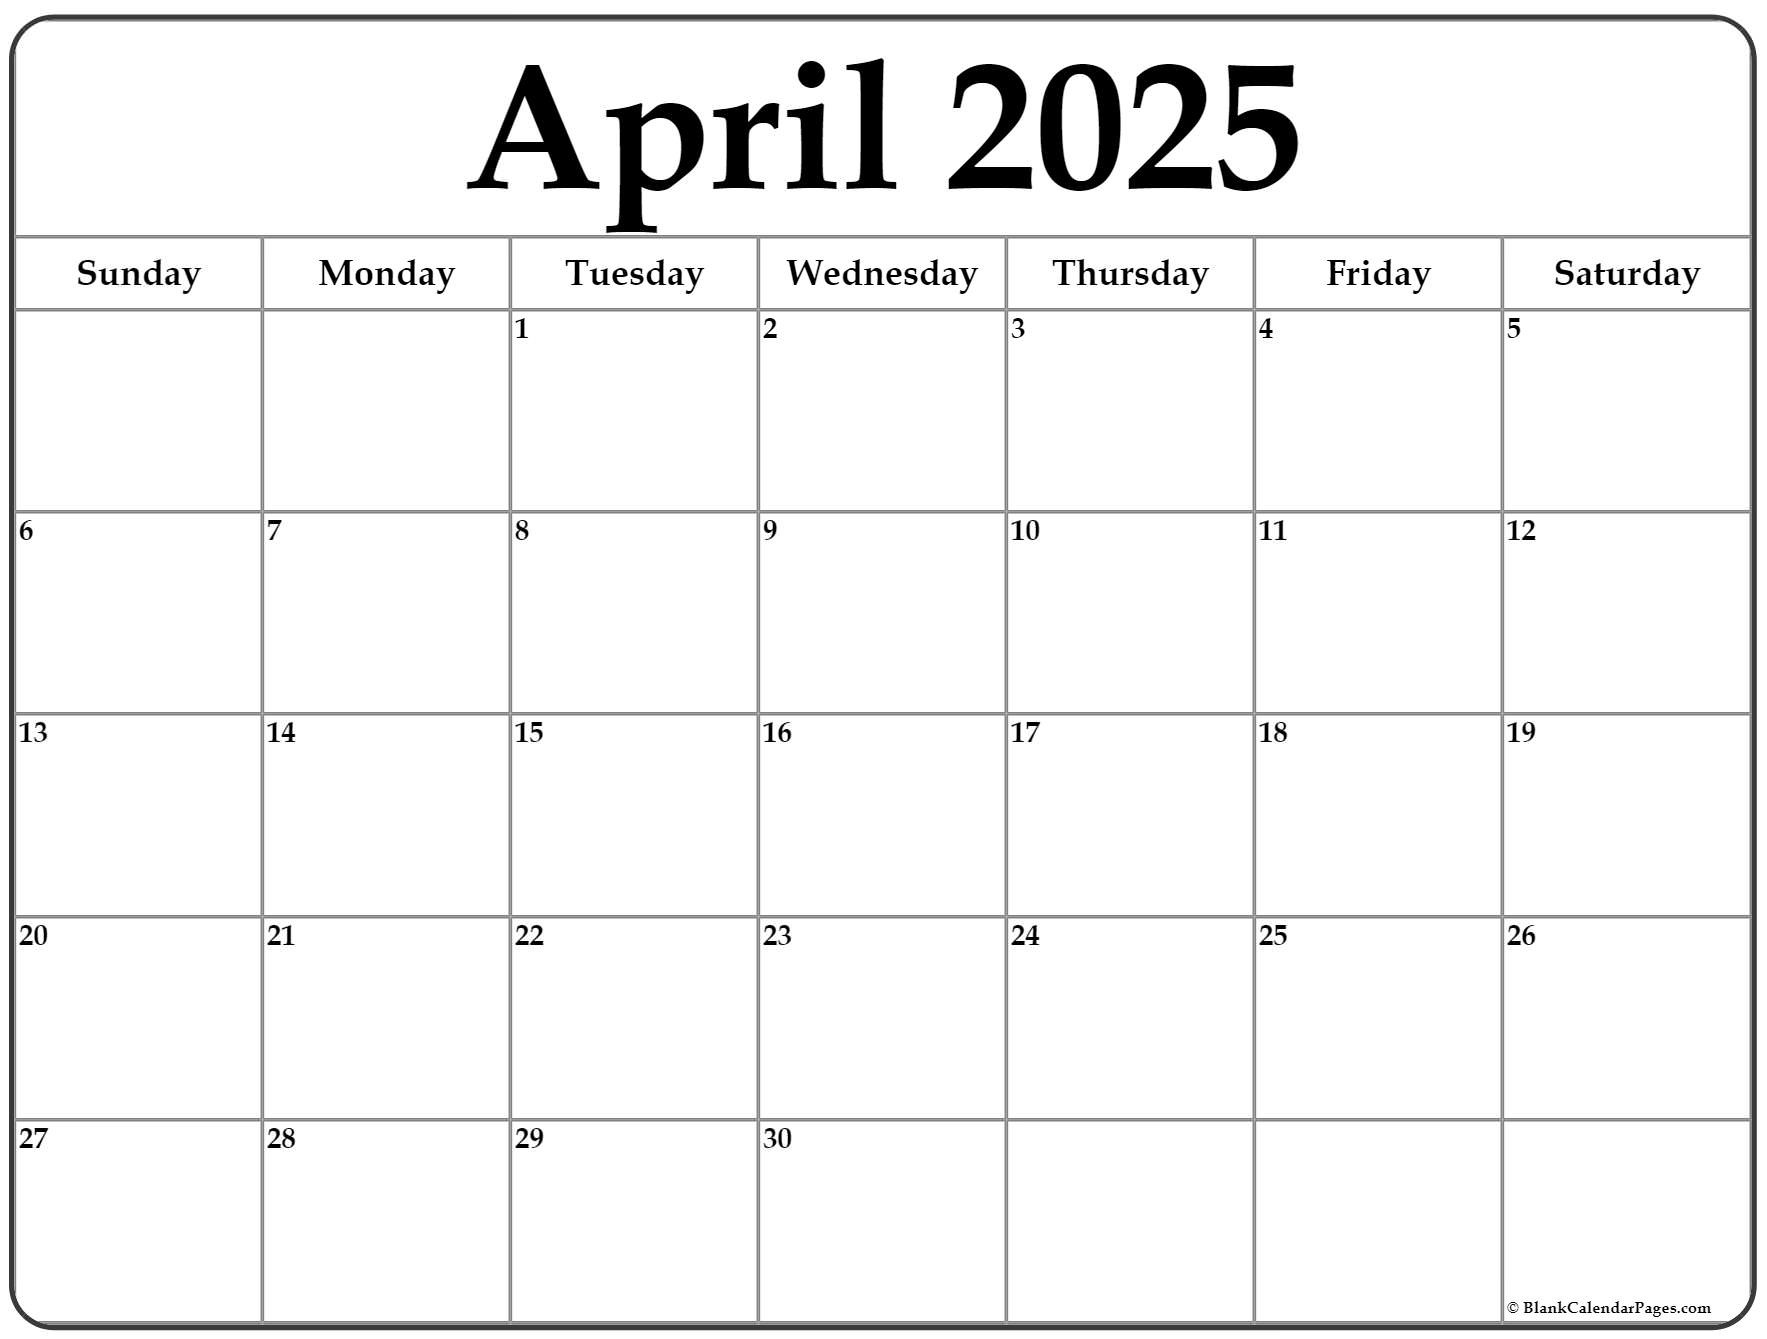 January Through April 2025 Calendar Printable 